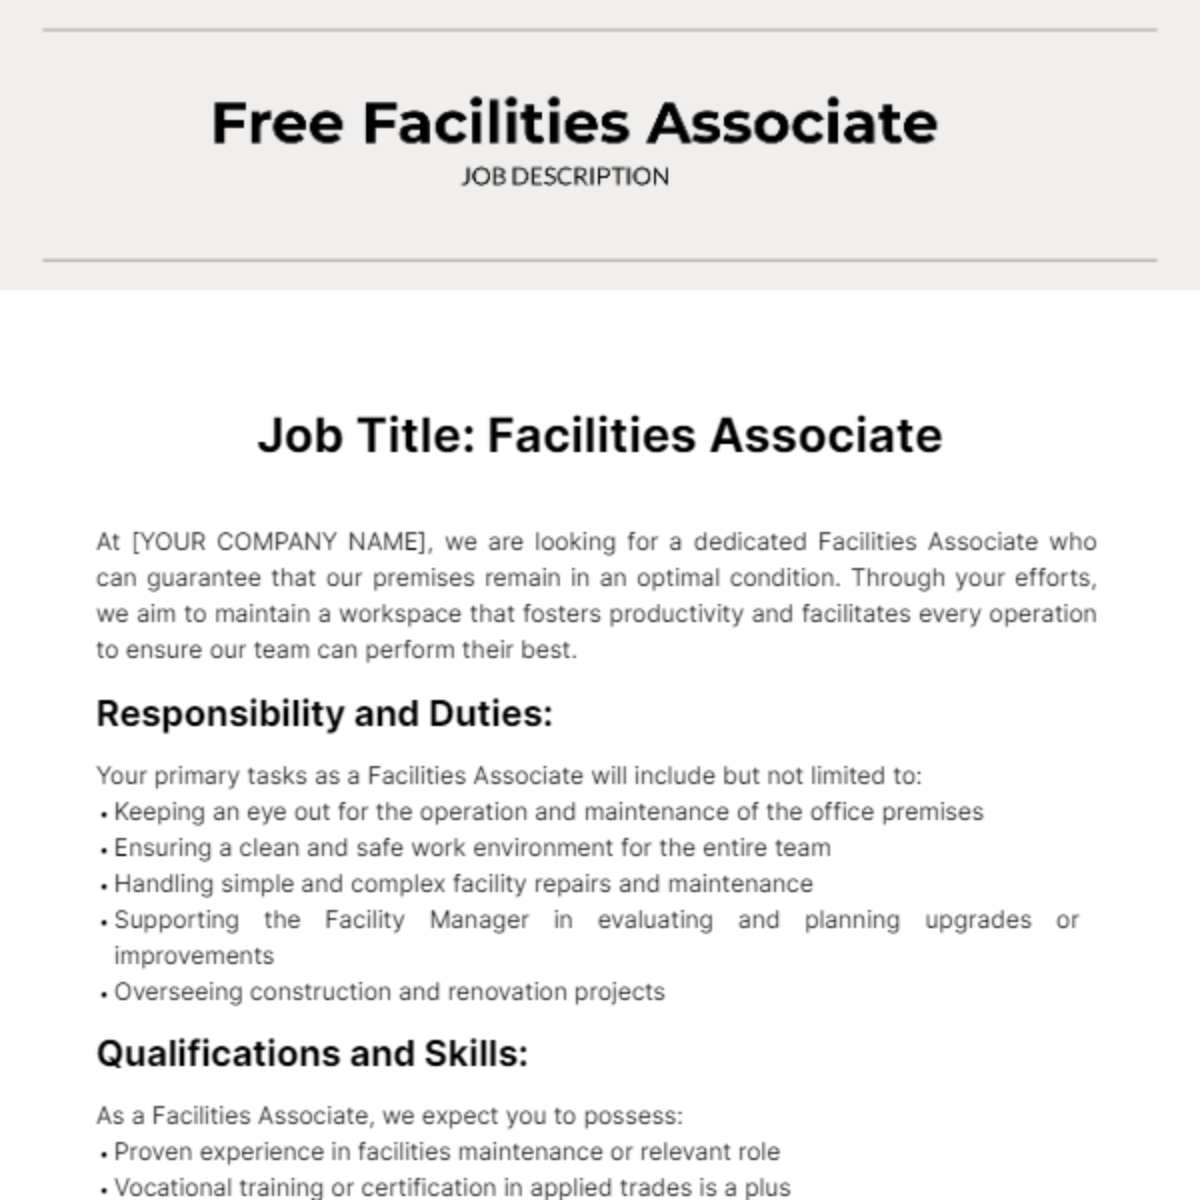 Free Facilities Associate Job Description Template